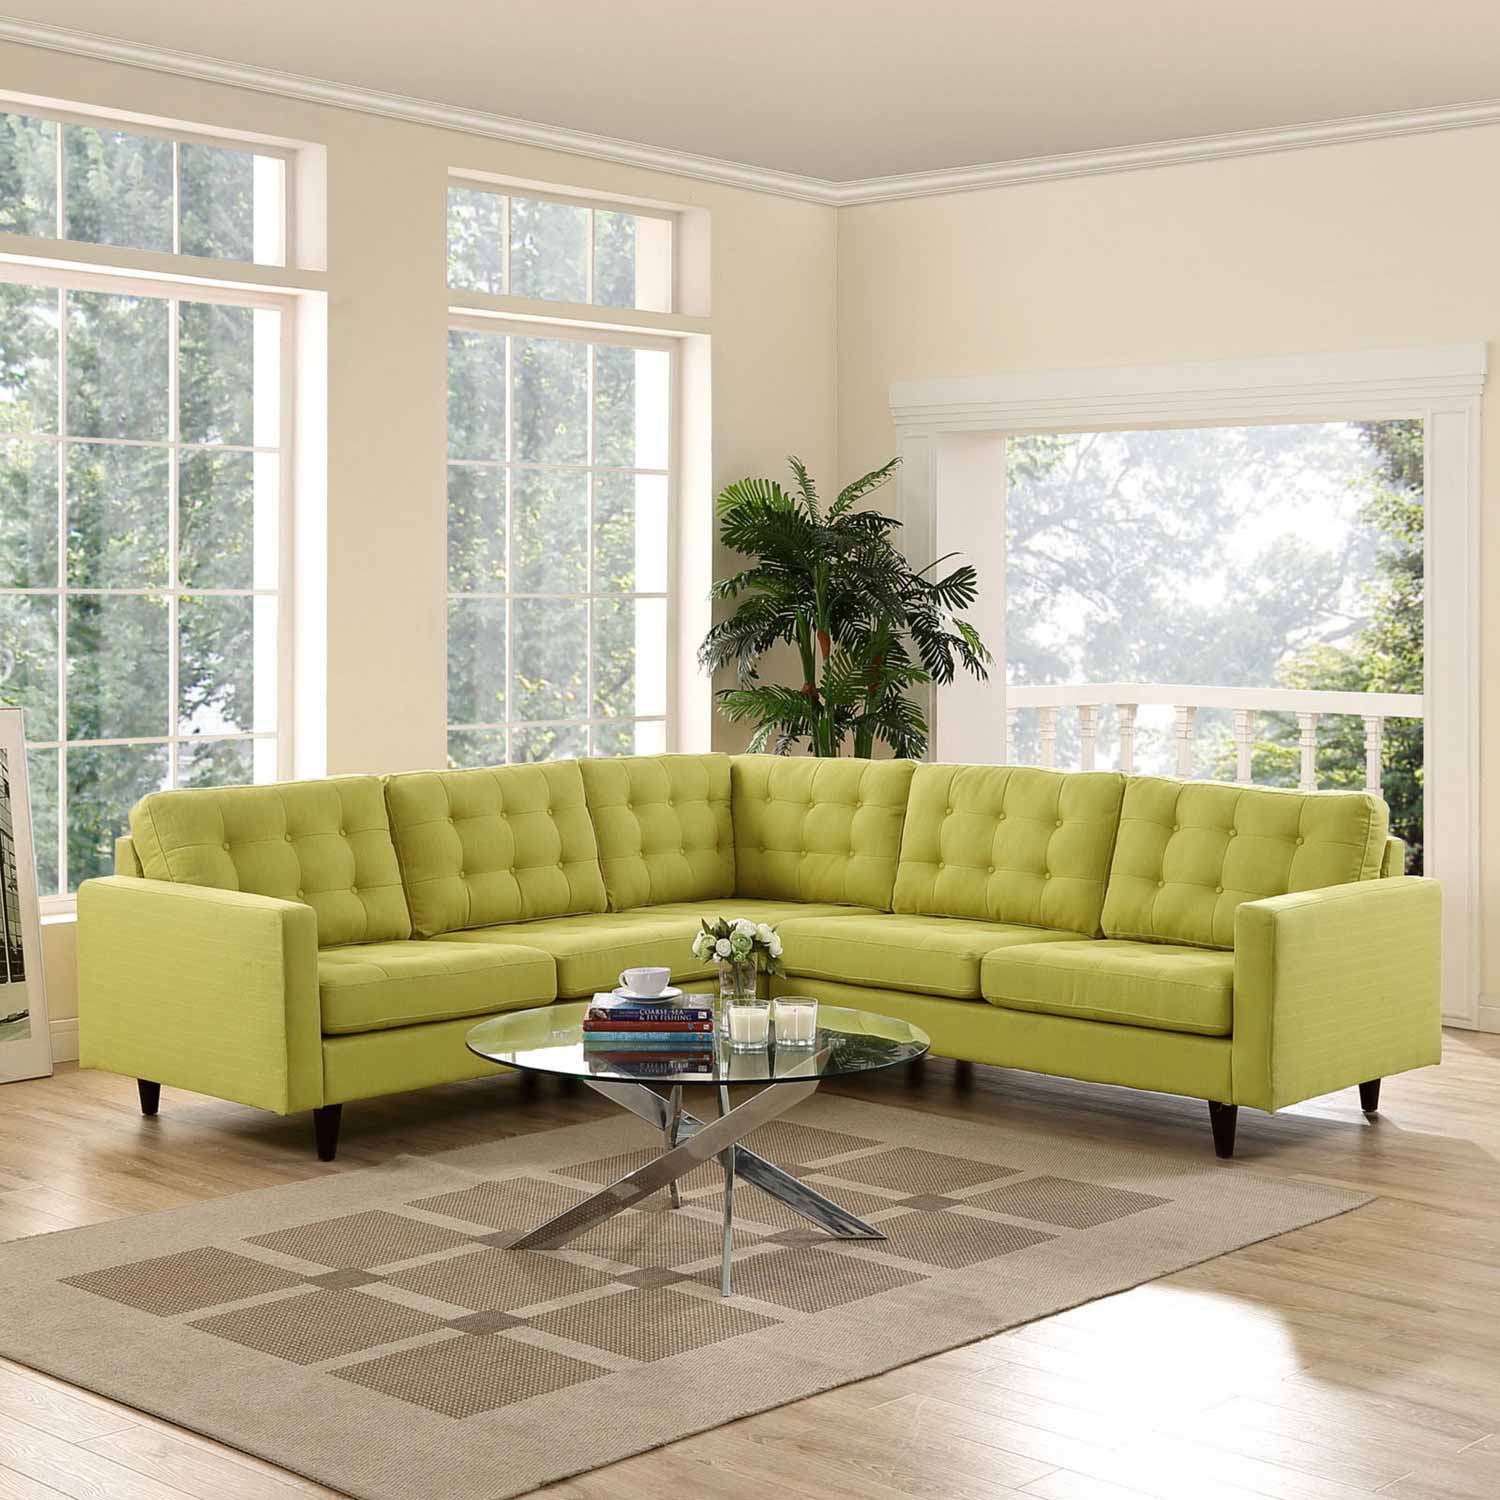 Modway Empress 3 Piece Fabric Sectional Sofa Set - Wheatgrass